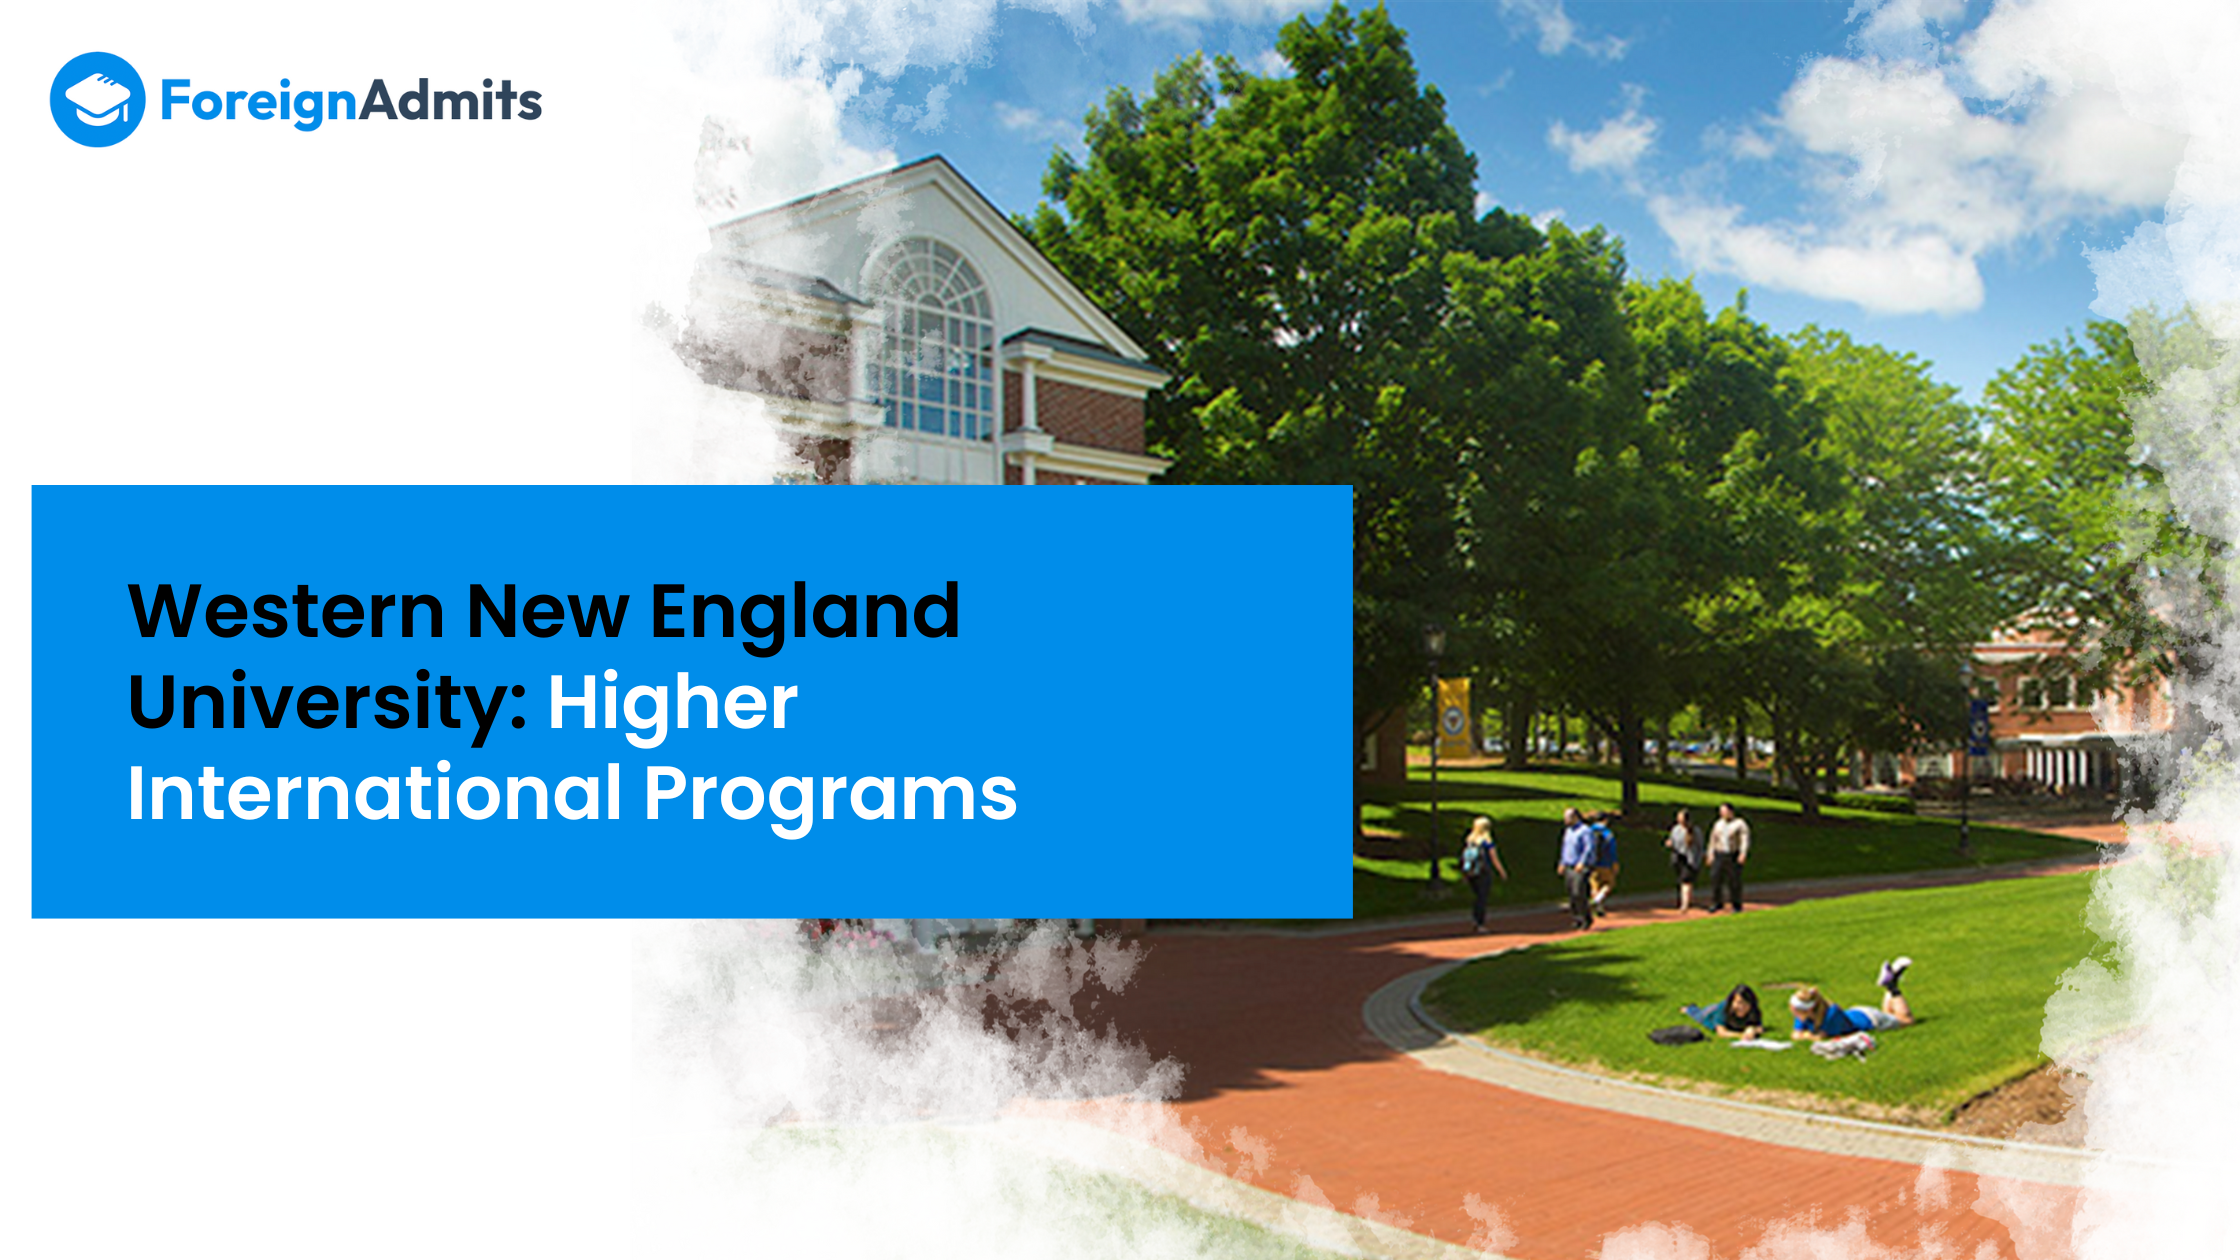 Western New England University: Higher International Programs